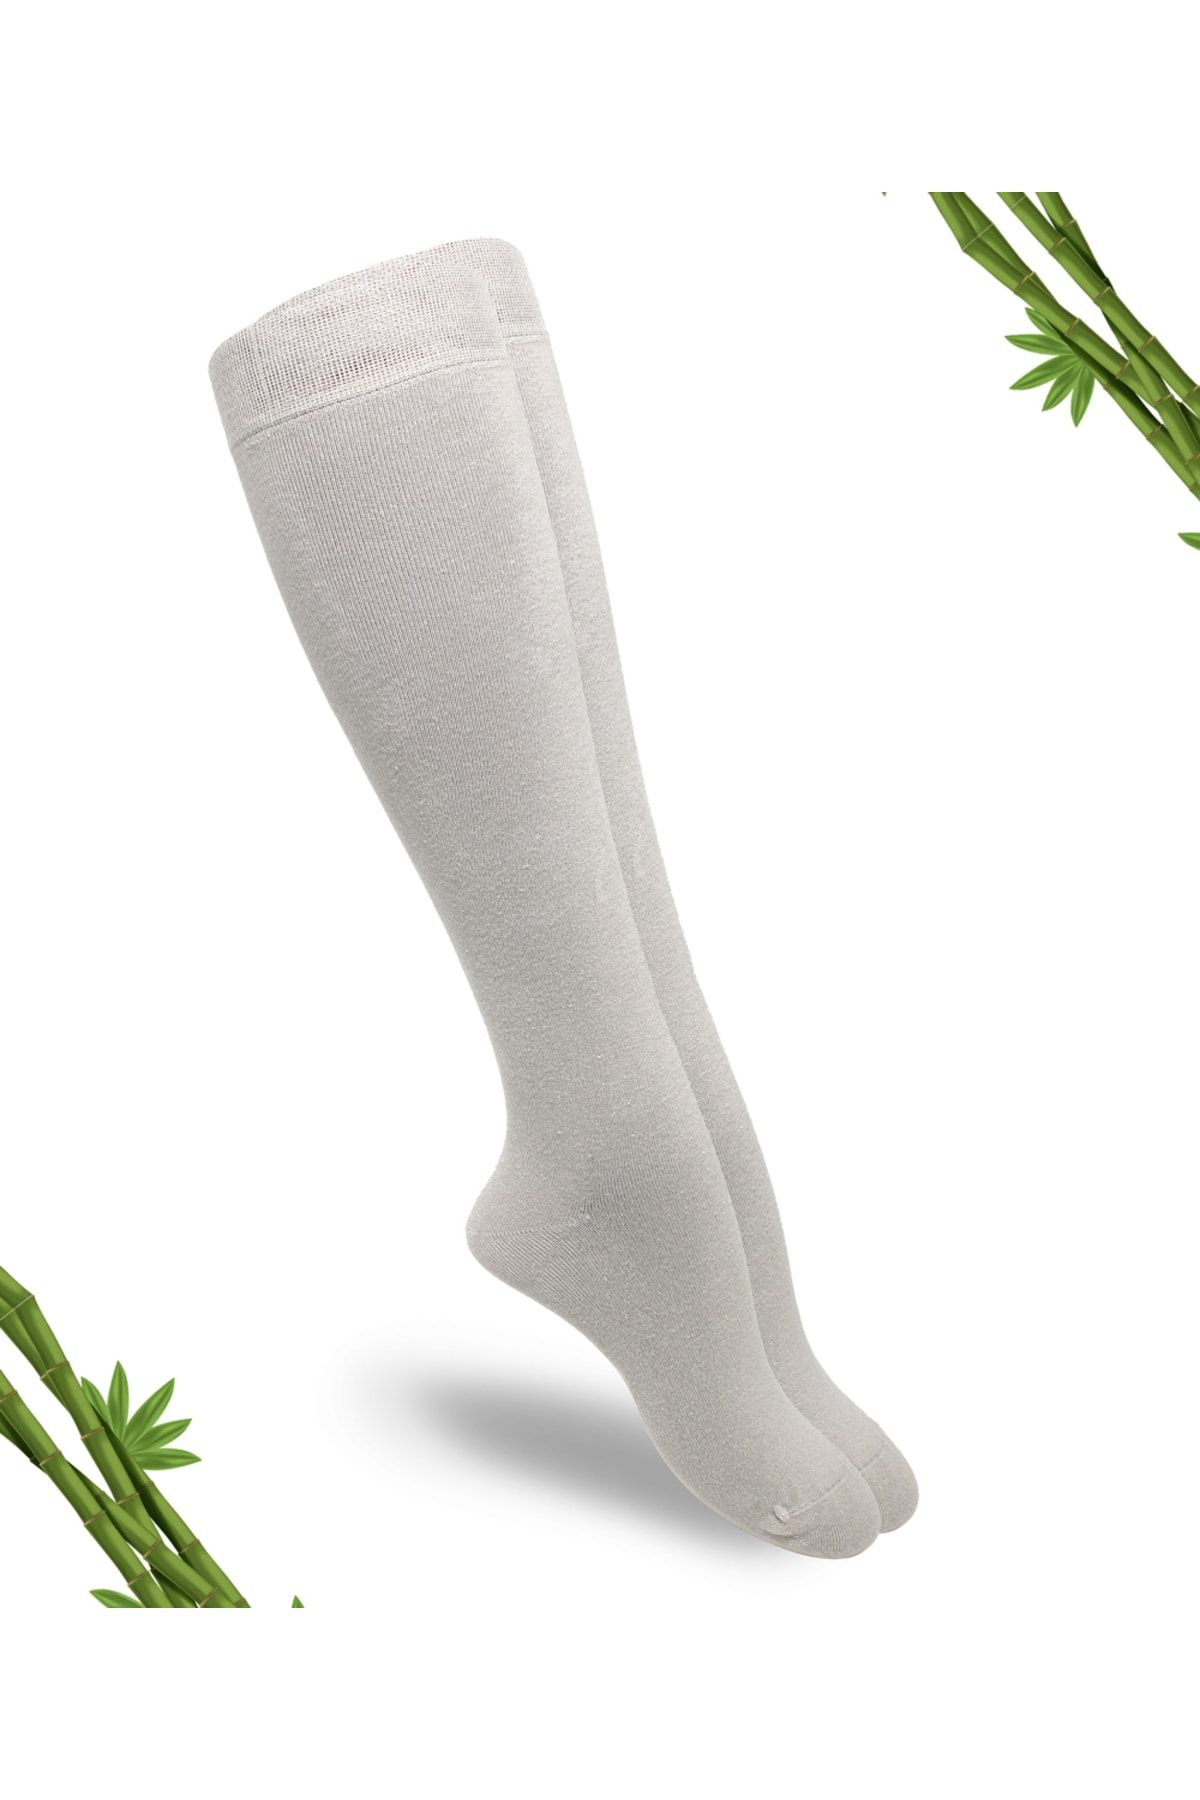 DAYCO Premium Taş Gri Kadın Dikişsiz Dizaltı Bambu Çorap - 382-tgrı - (1 ÇİFT)